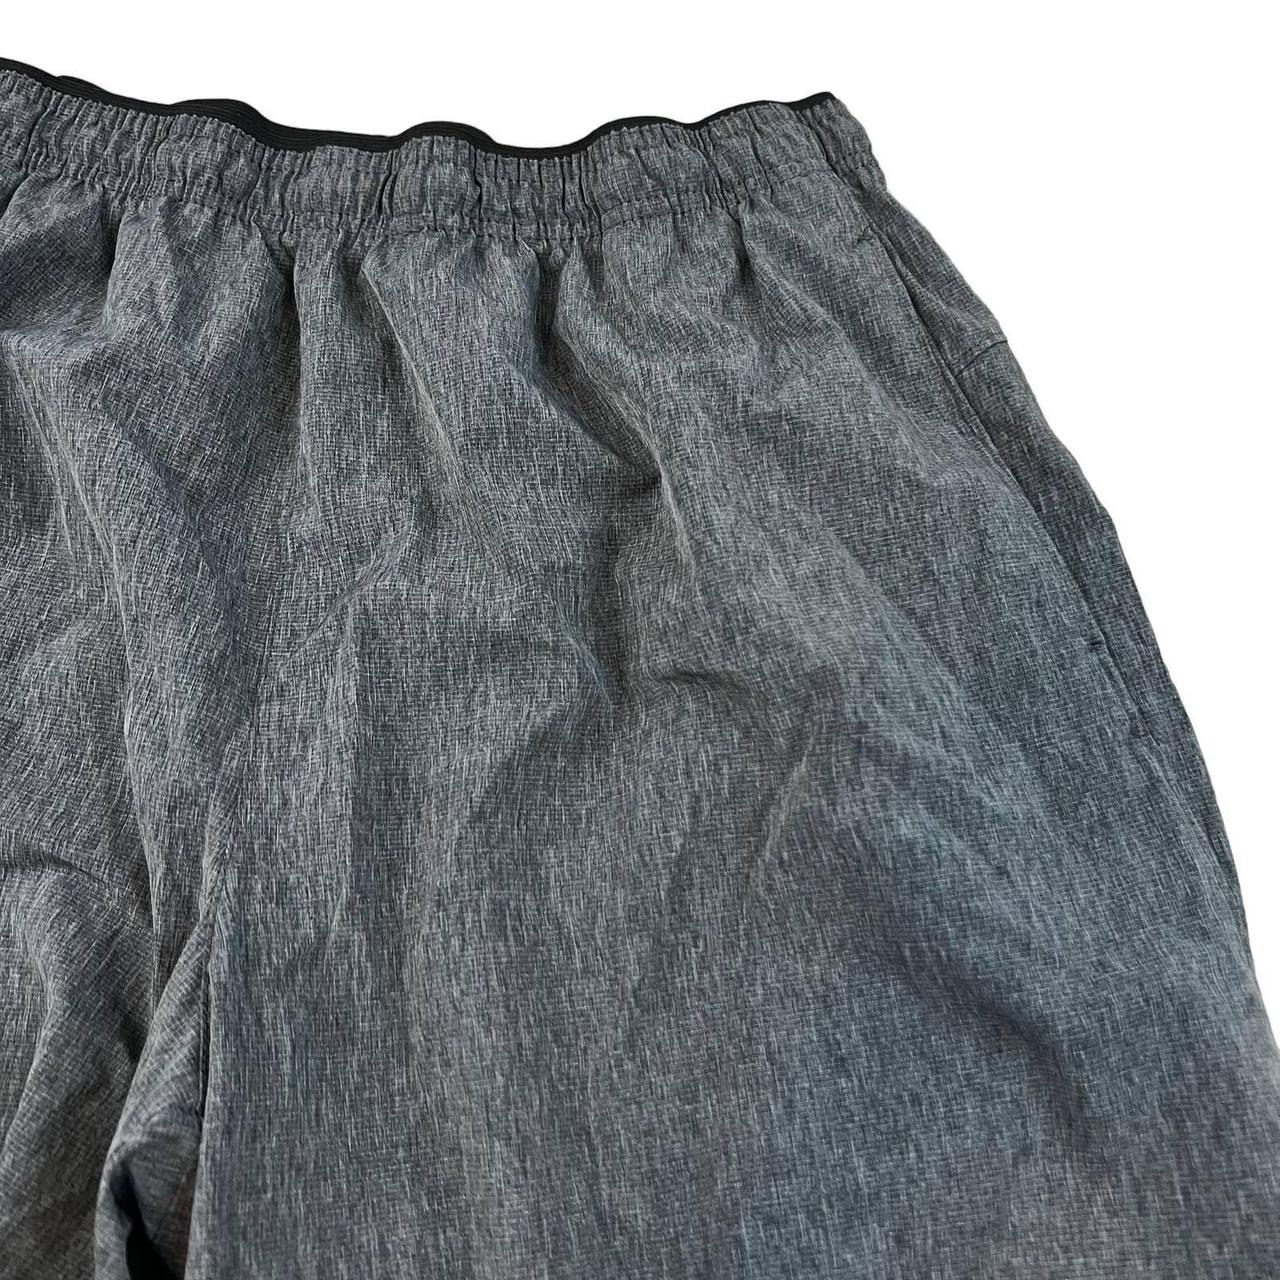 Apana dark heather gray athletic shorts - all over - Depop